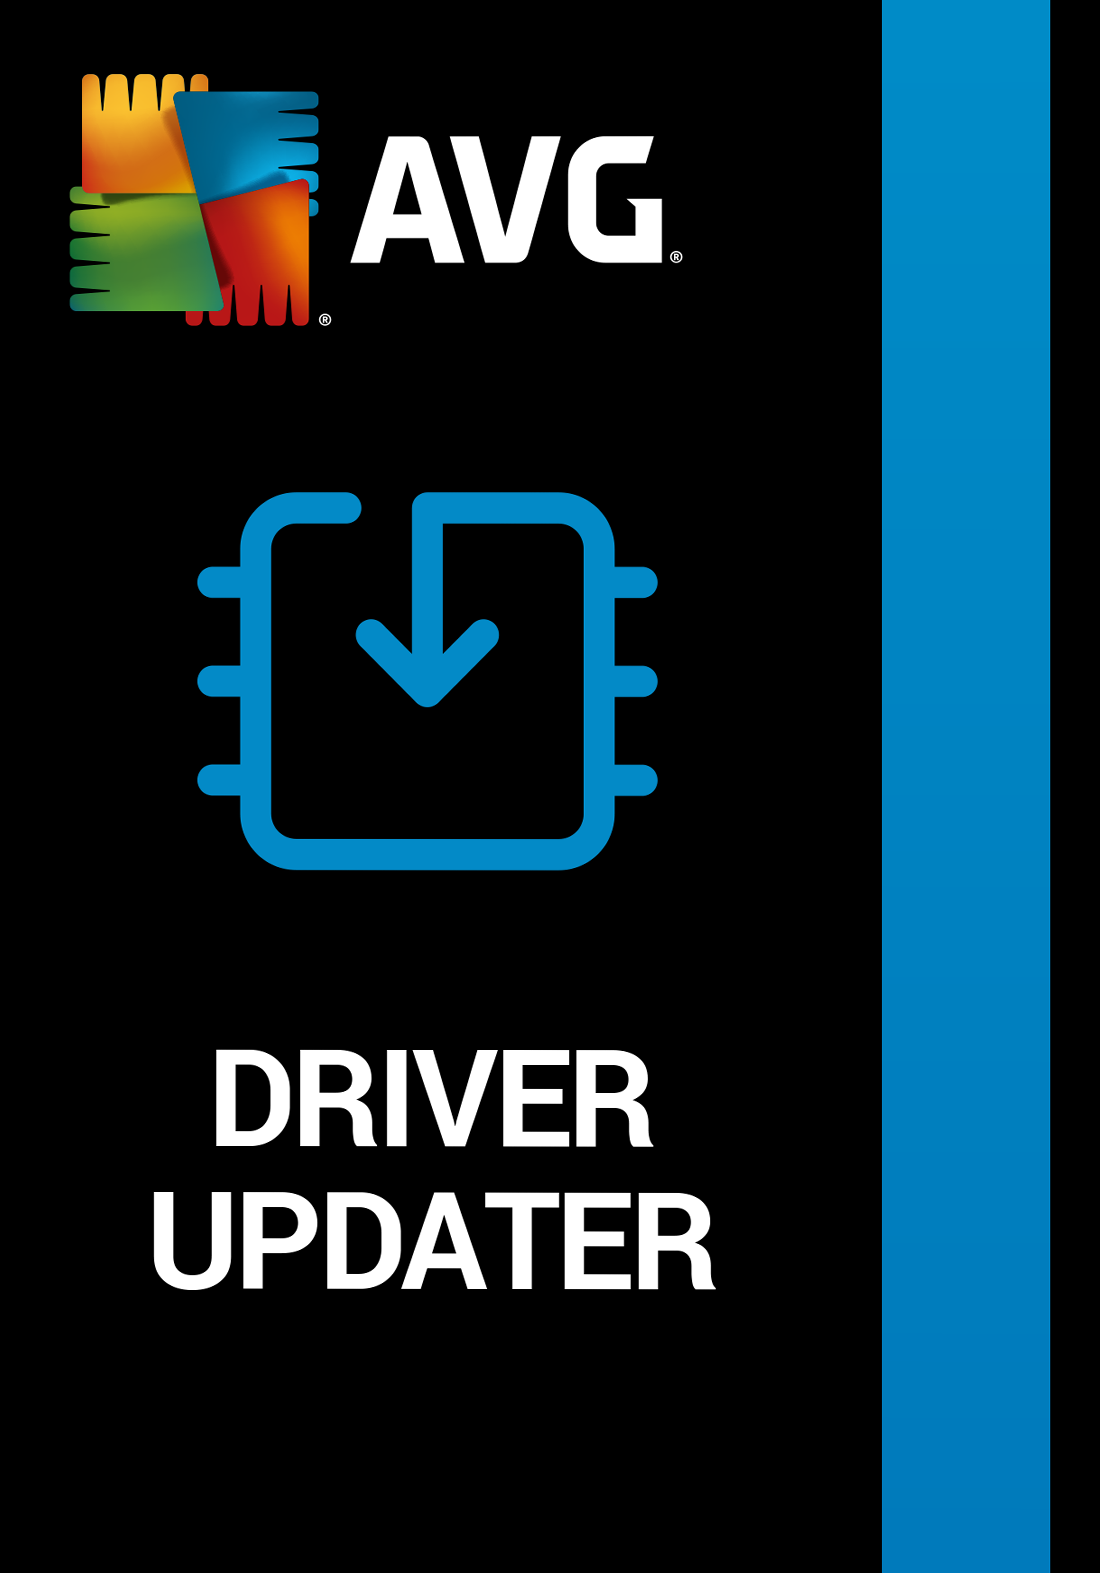 Se AVG Driver Updater - 1 enhed / 2 år hos e-Gear.dk